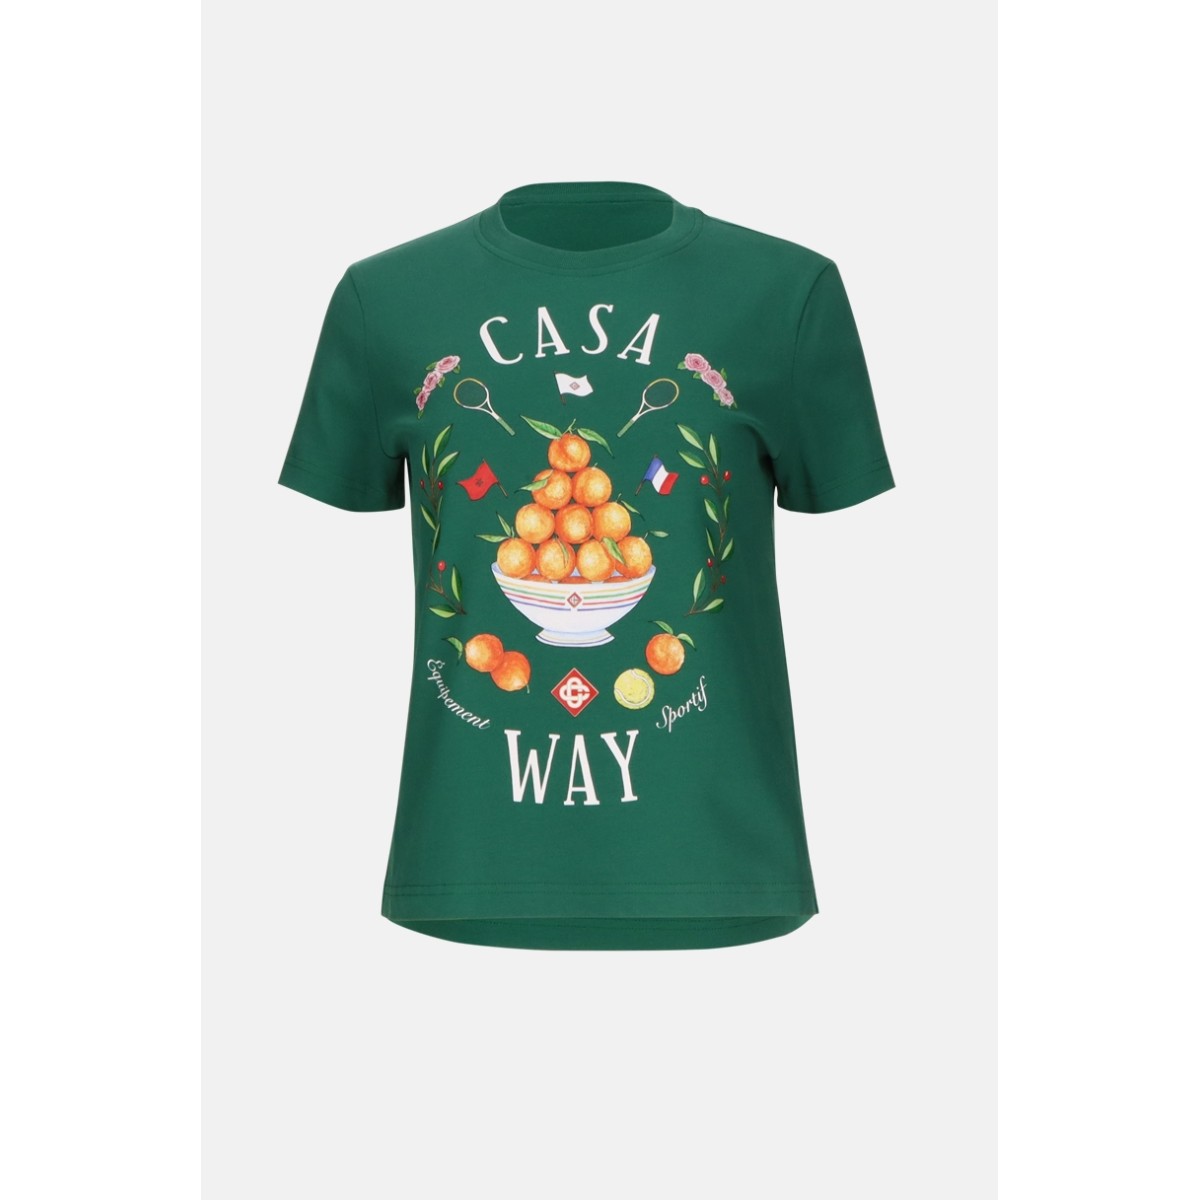 T-shirt "Casa Way" Casablanca